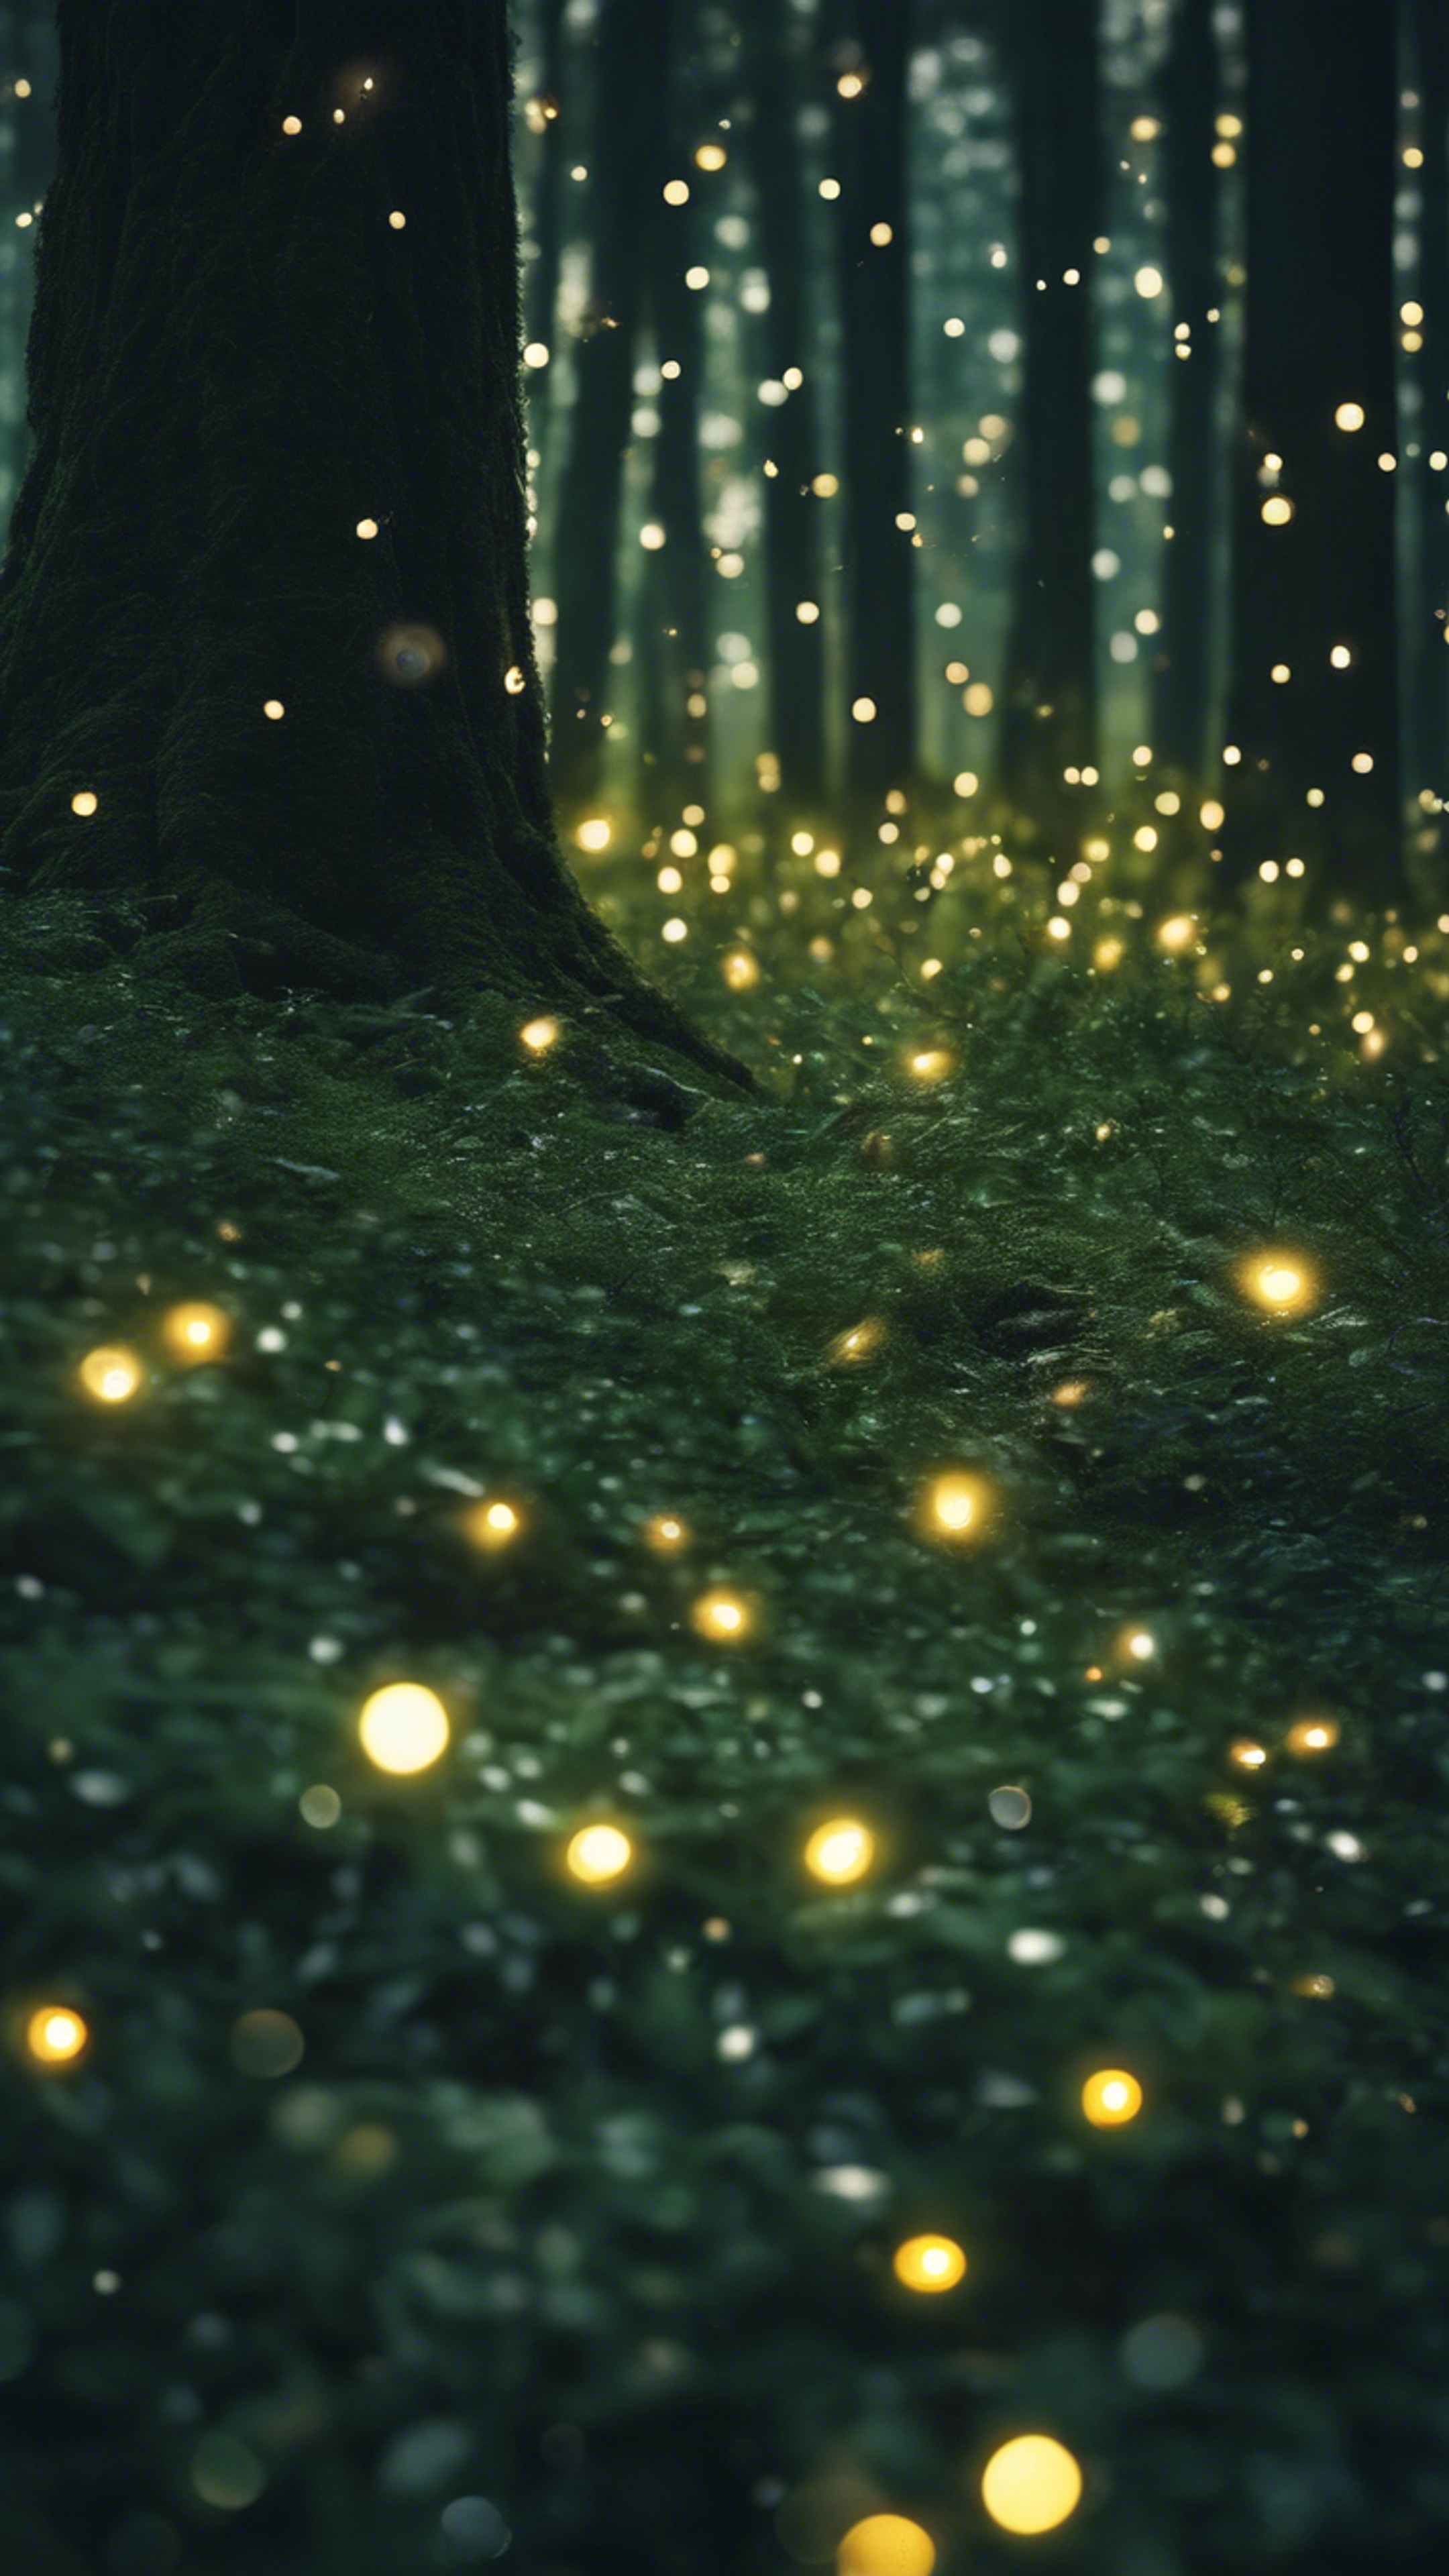 A dark green forest in the twilights, flecked with shimmering fireflies. Hintergrund[48f2b28e2b5742fcbebf]